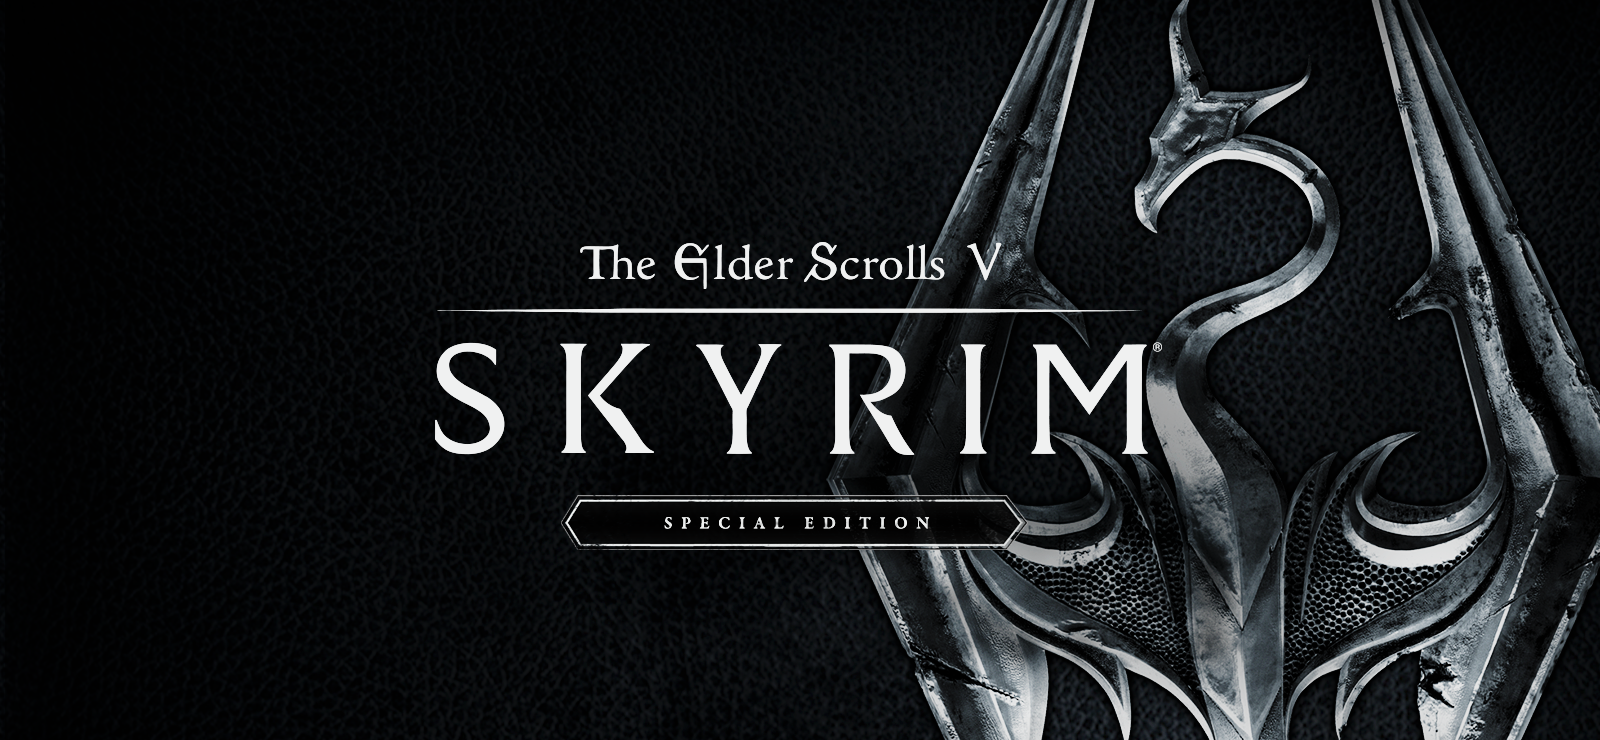 BESTSELLER - The Elder Scrolls V: Skyrim Special Edition